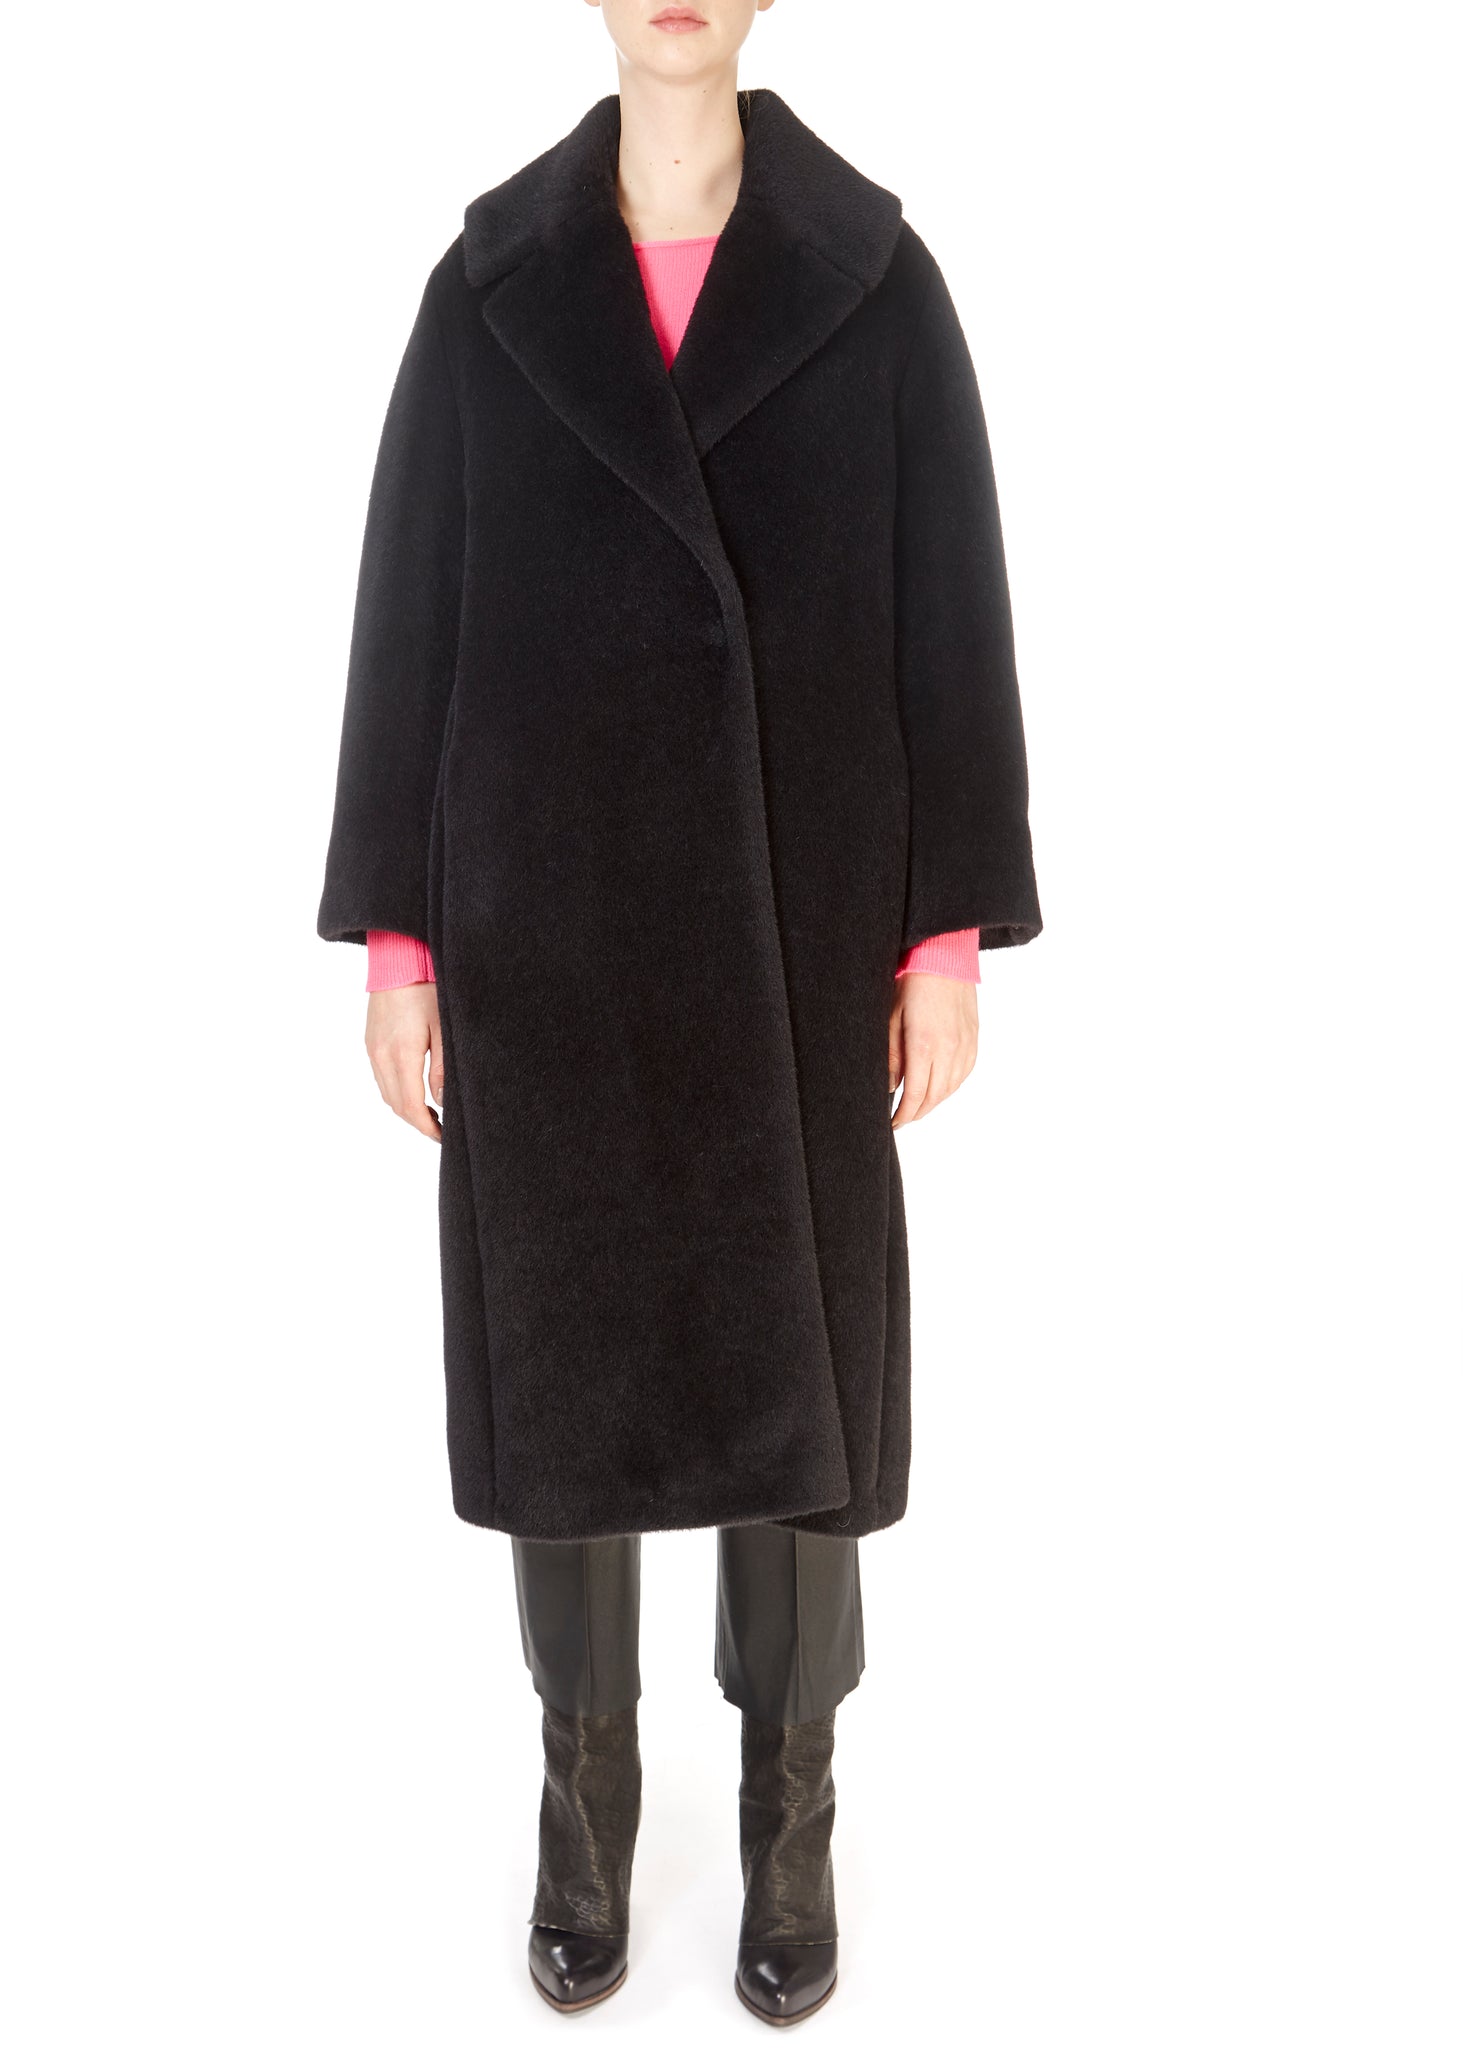 'Laumiere' Black Oversized Alpaca Coat - Jessimara